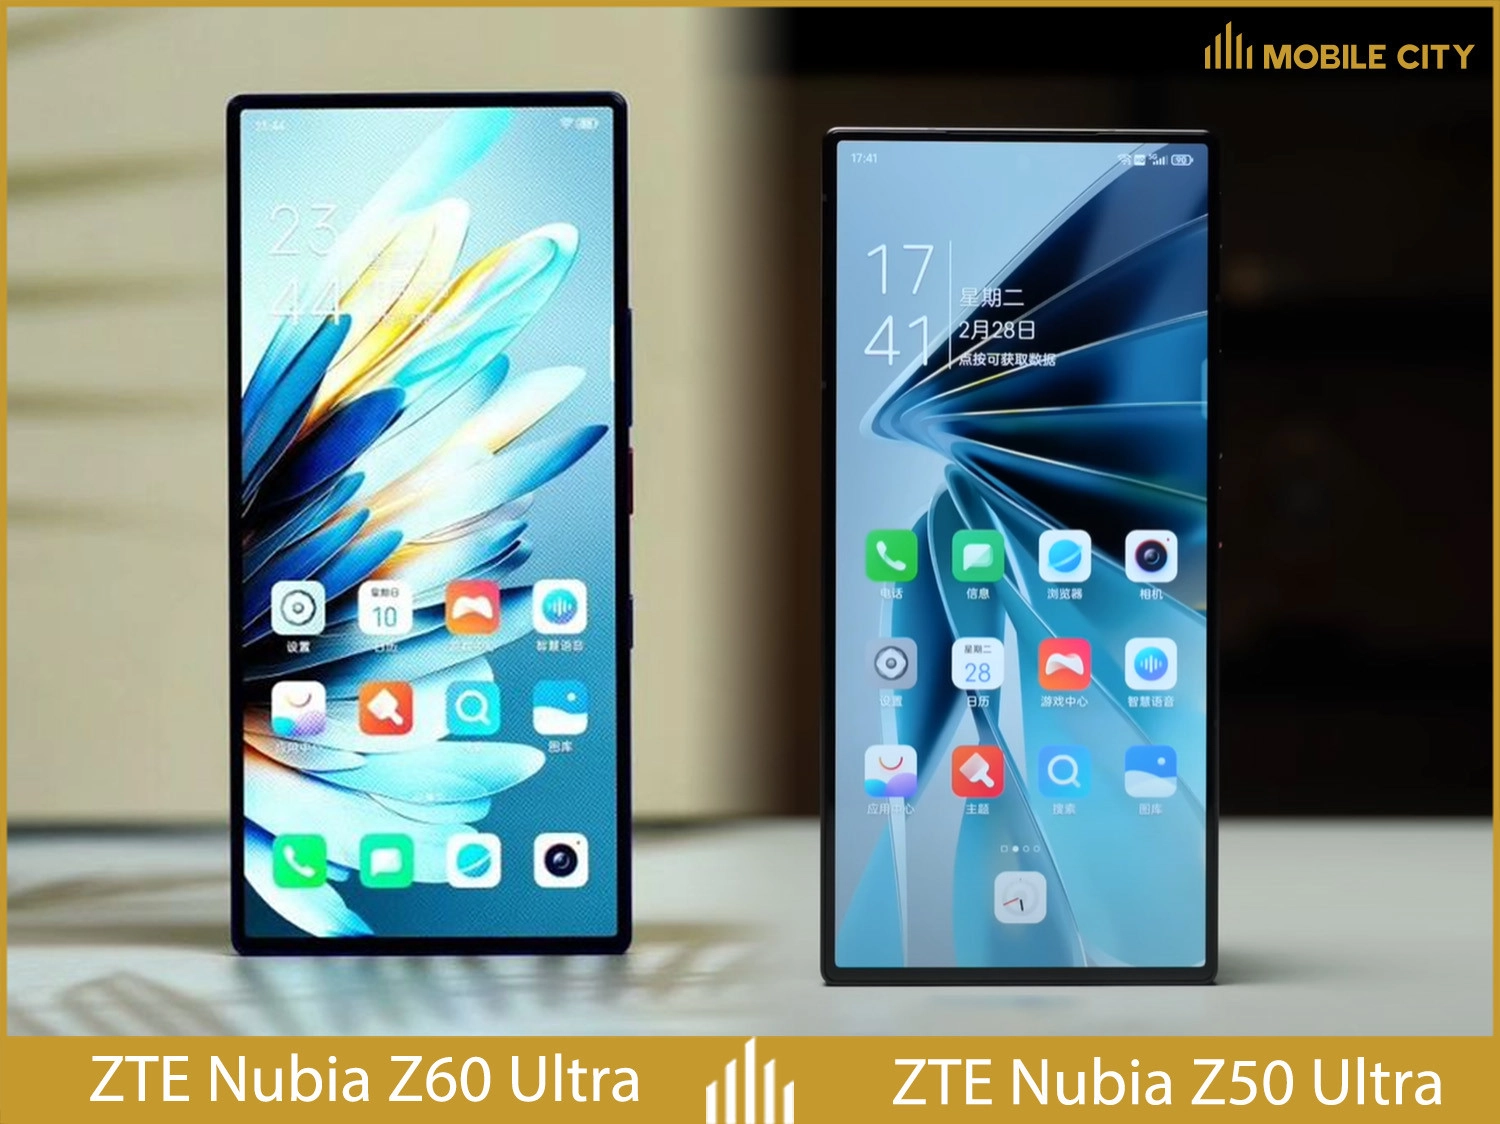 zte-nubia-z60-ultra-so-sanh-voi-zte-nubia-z50-ultra-001